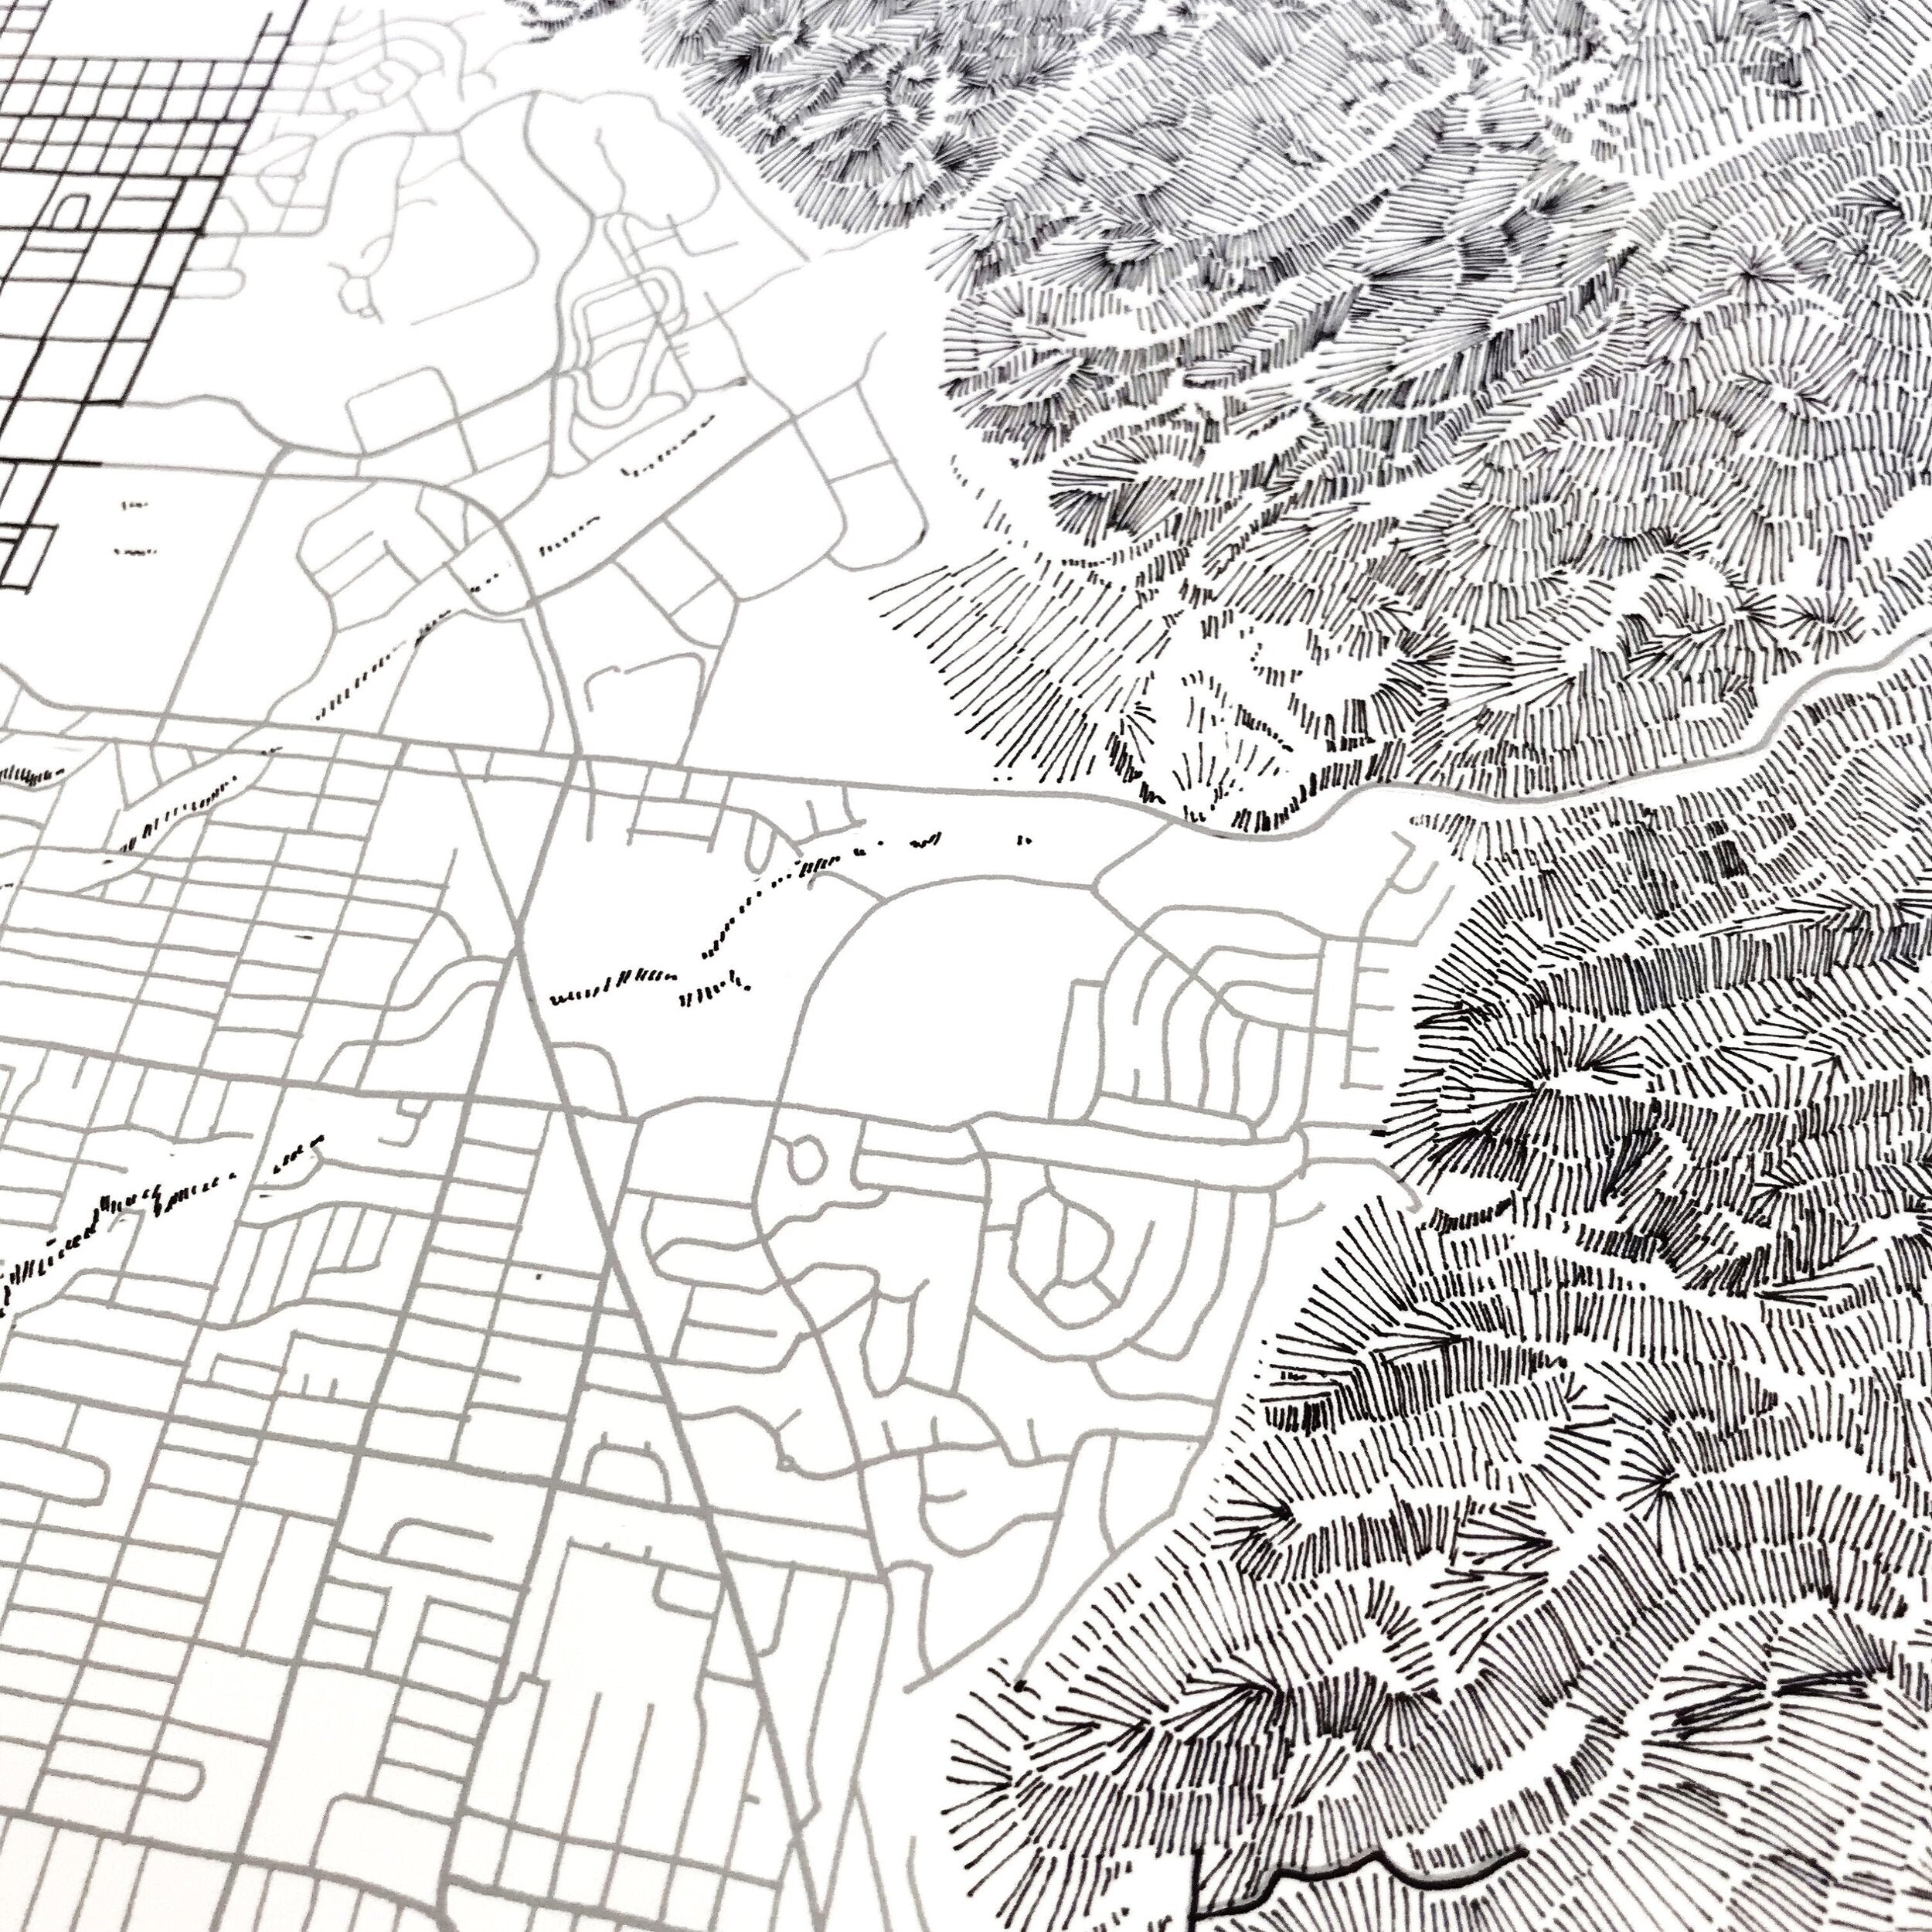 SALT LAKE CITY Cit Lines Map + Topographic Drawing: PRINT